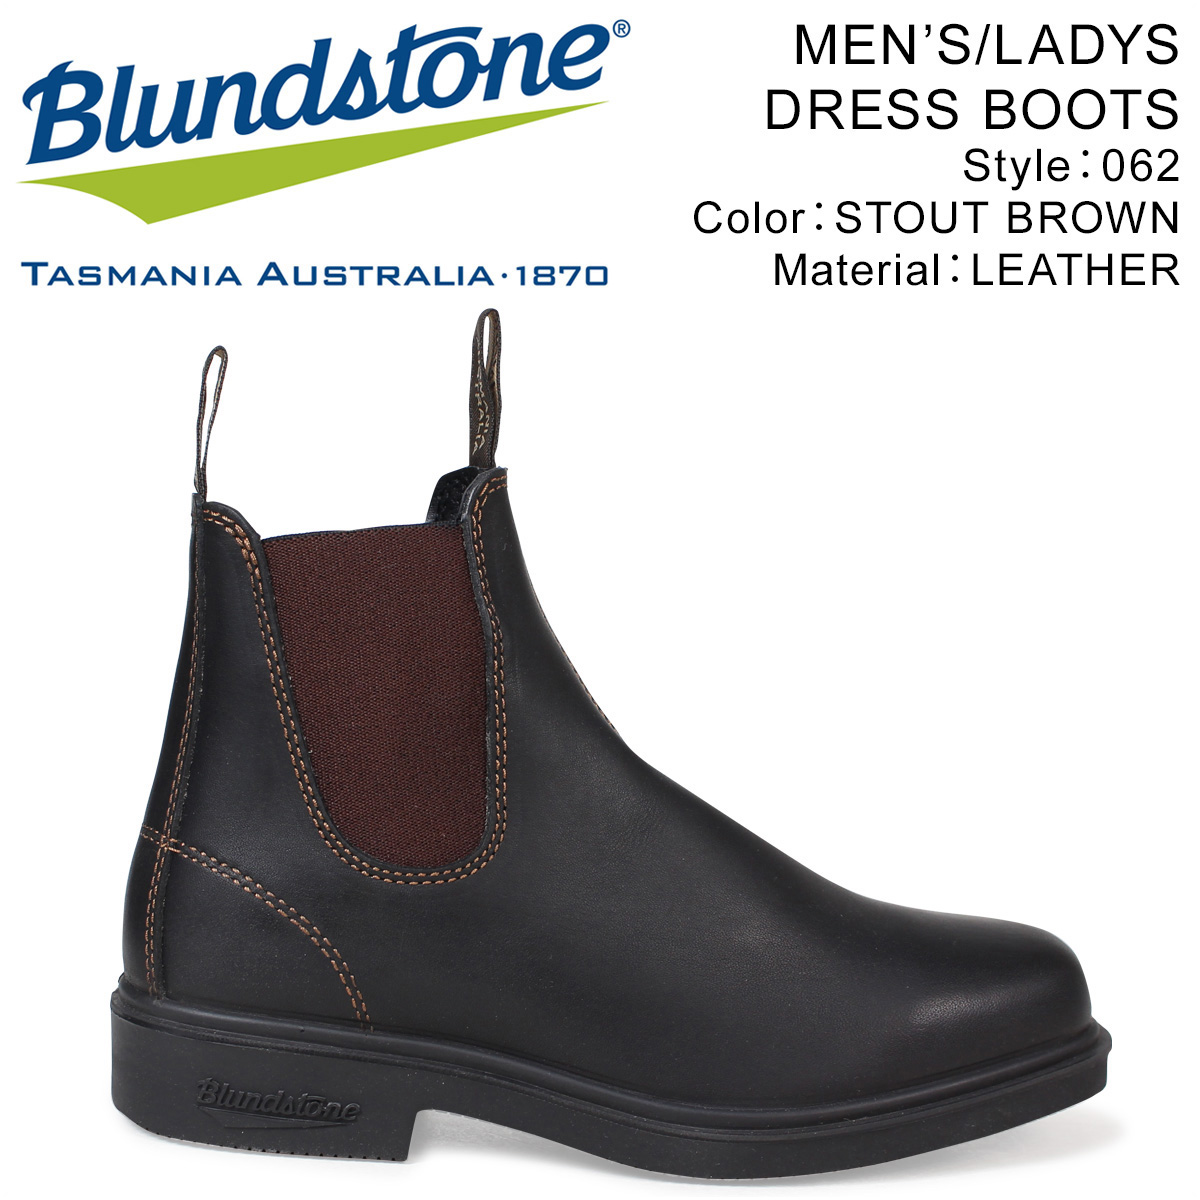 Blundstone ブランドストーン サイドゴア メンズ レディース ブーツ DRESS BOOTS 062 ブラウン画像